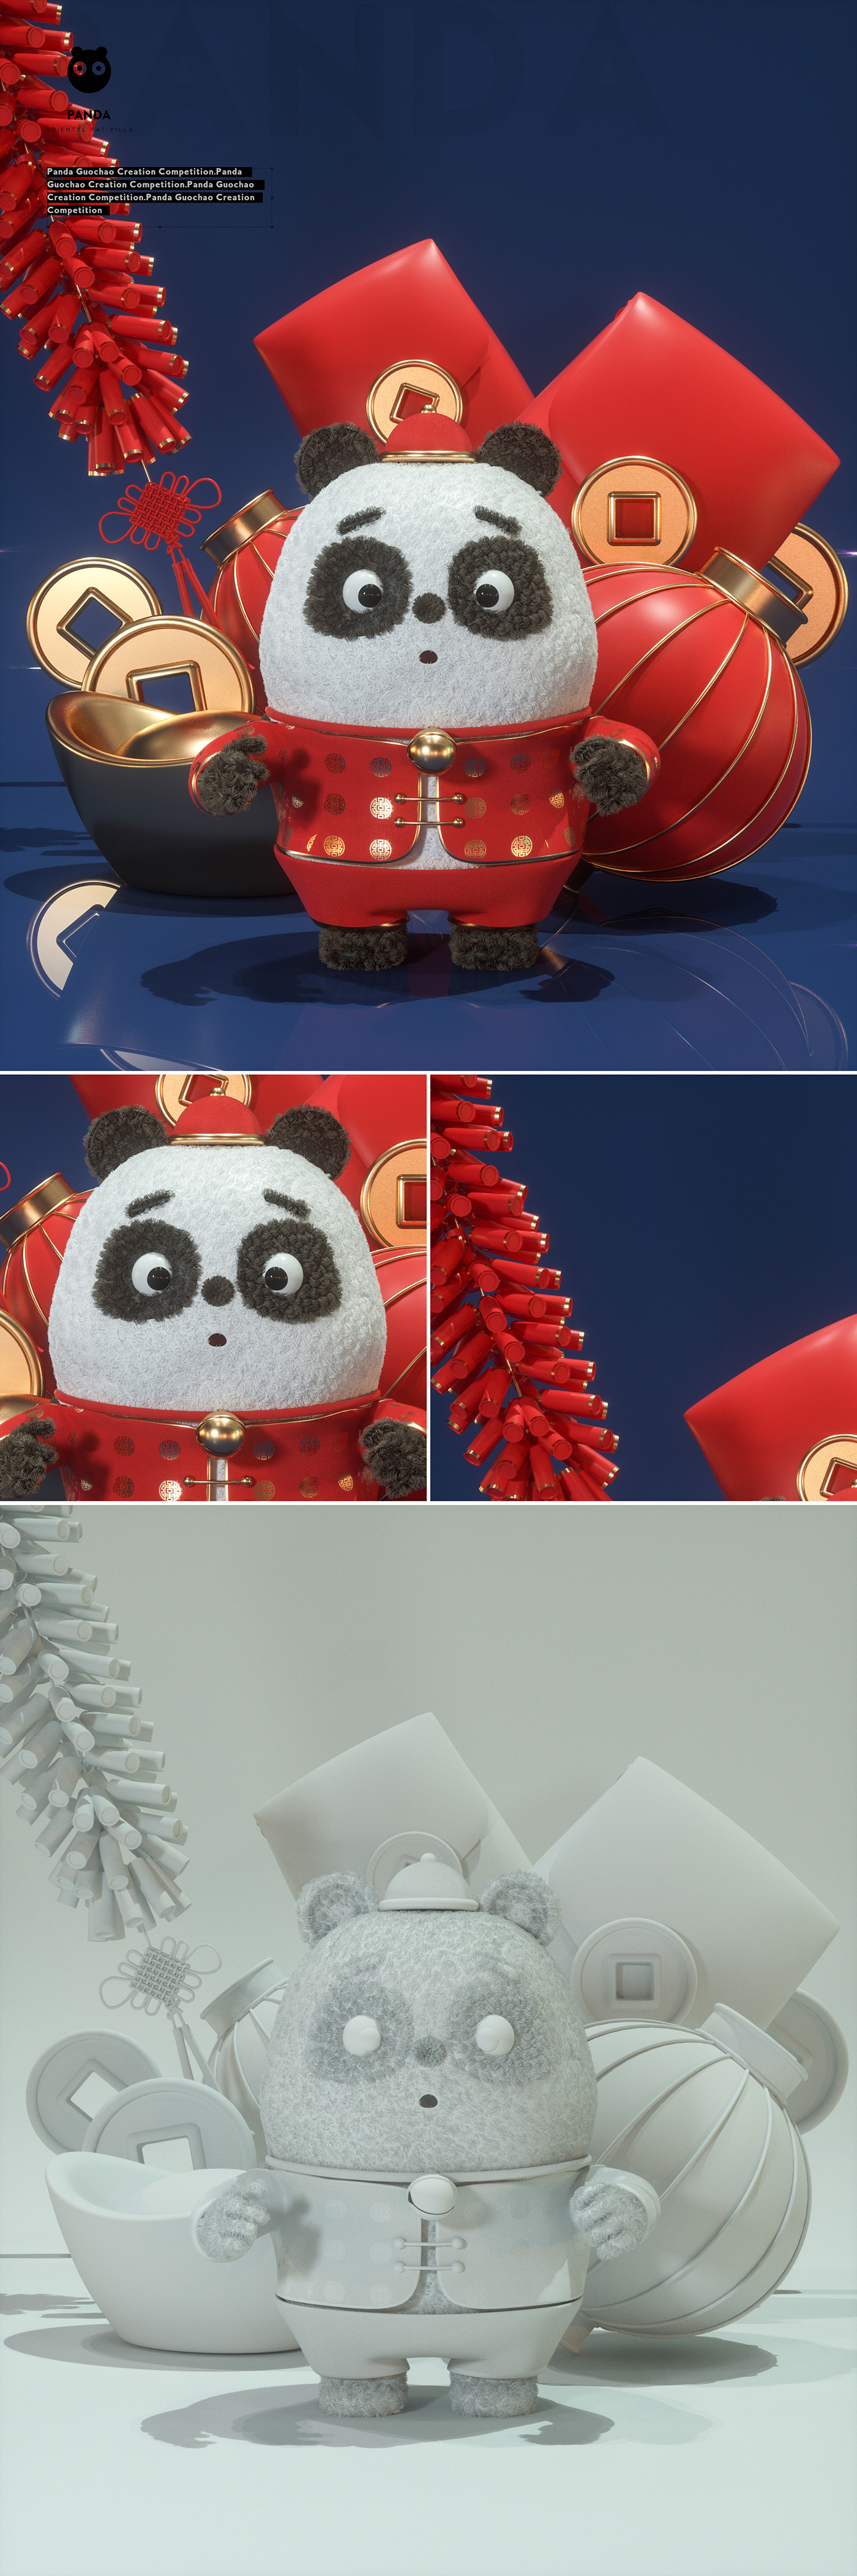 c4d Character chinese traditions Clothing Mascot Maxon Cinema 4d painting   Panda  peking opera 东方胖丸-国潮熊猫